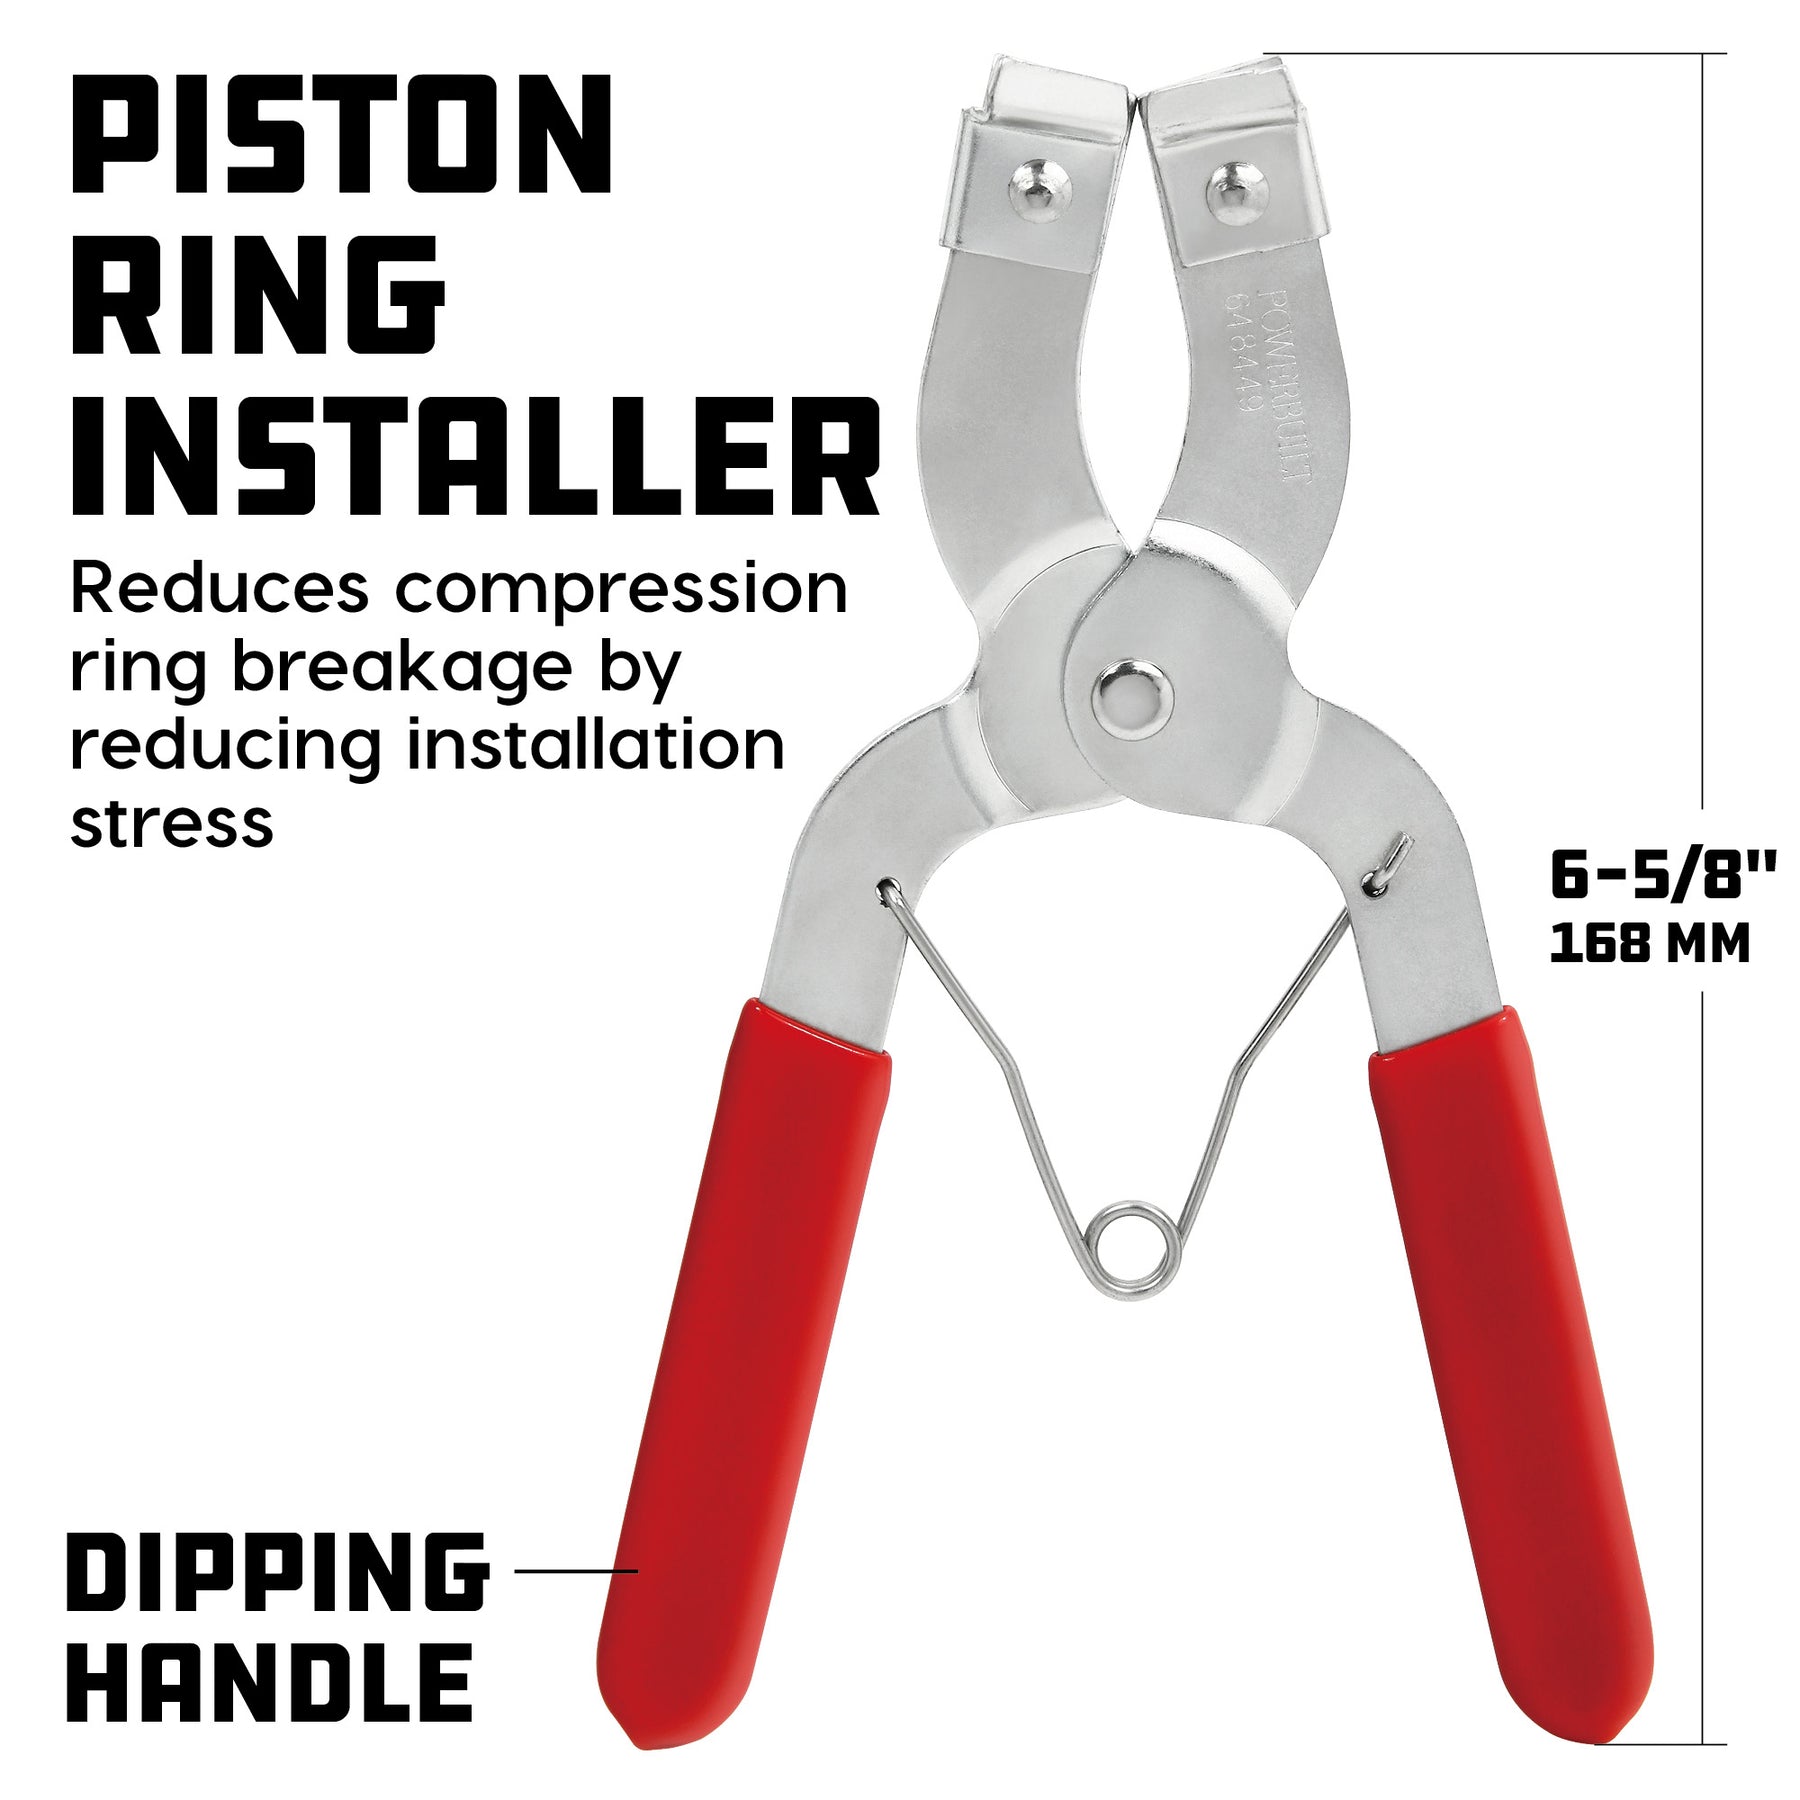 33500 Piston Ring Installer | Lisle Corporation